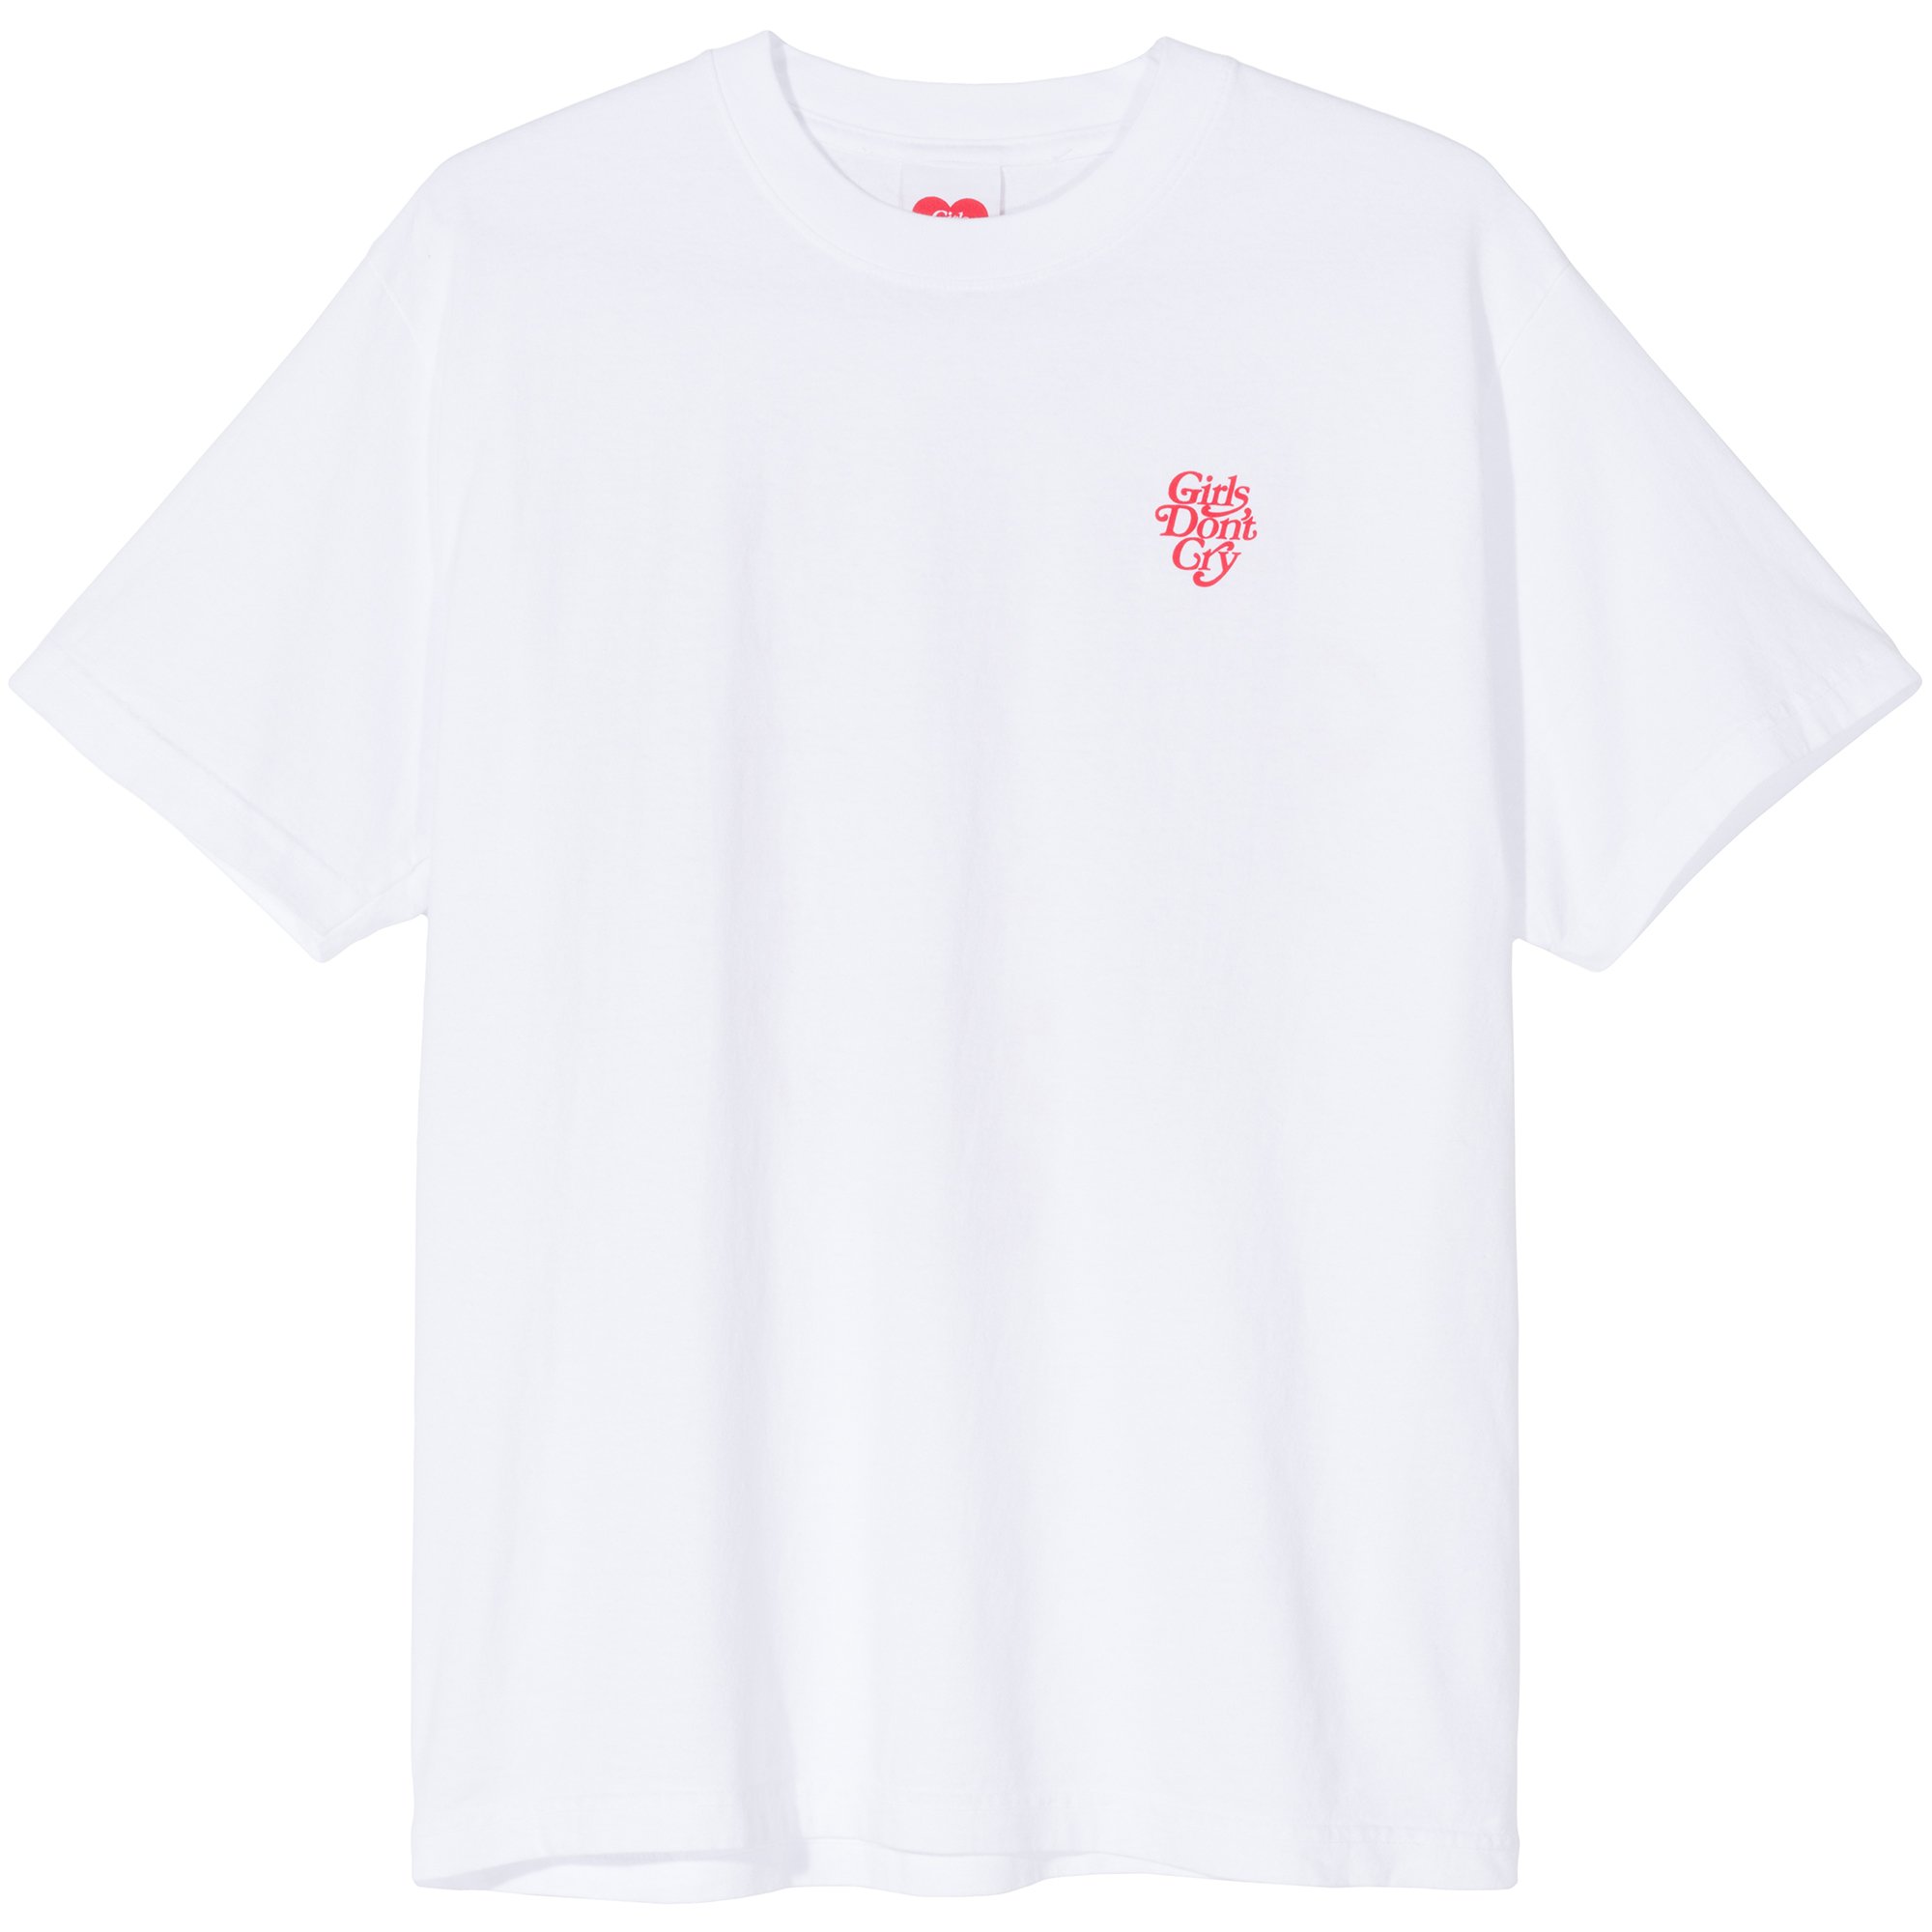 Girls Don't Cry Logo T-Shirt White - FW19 - US